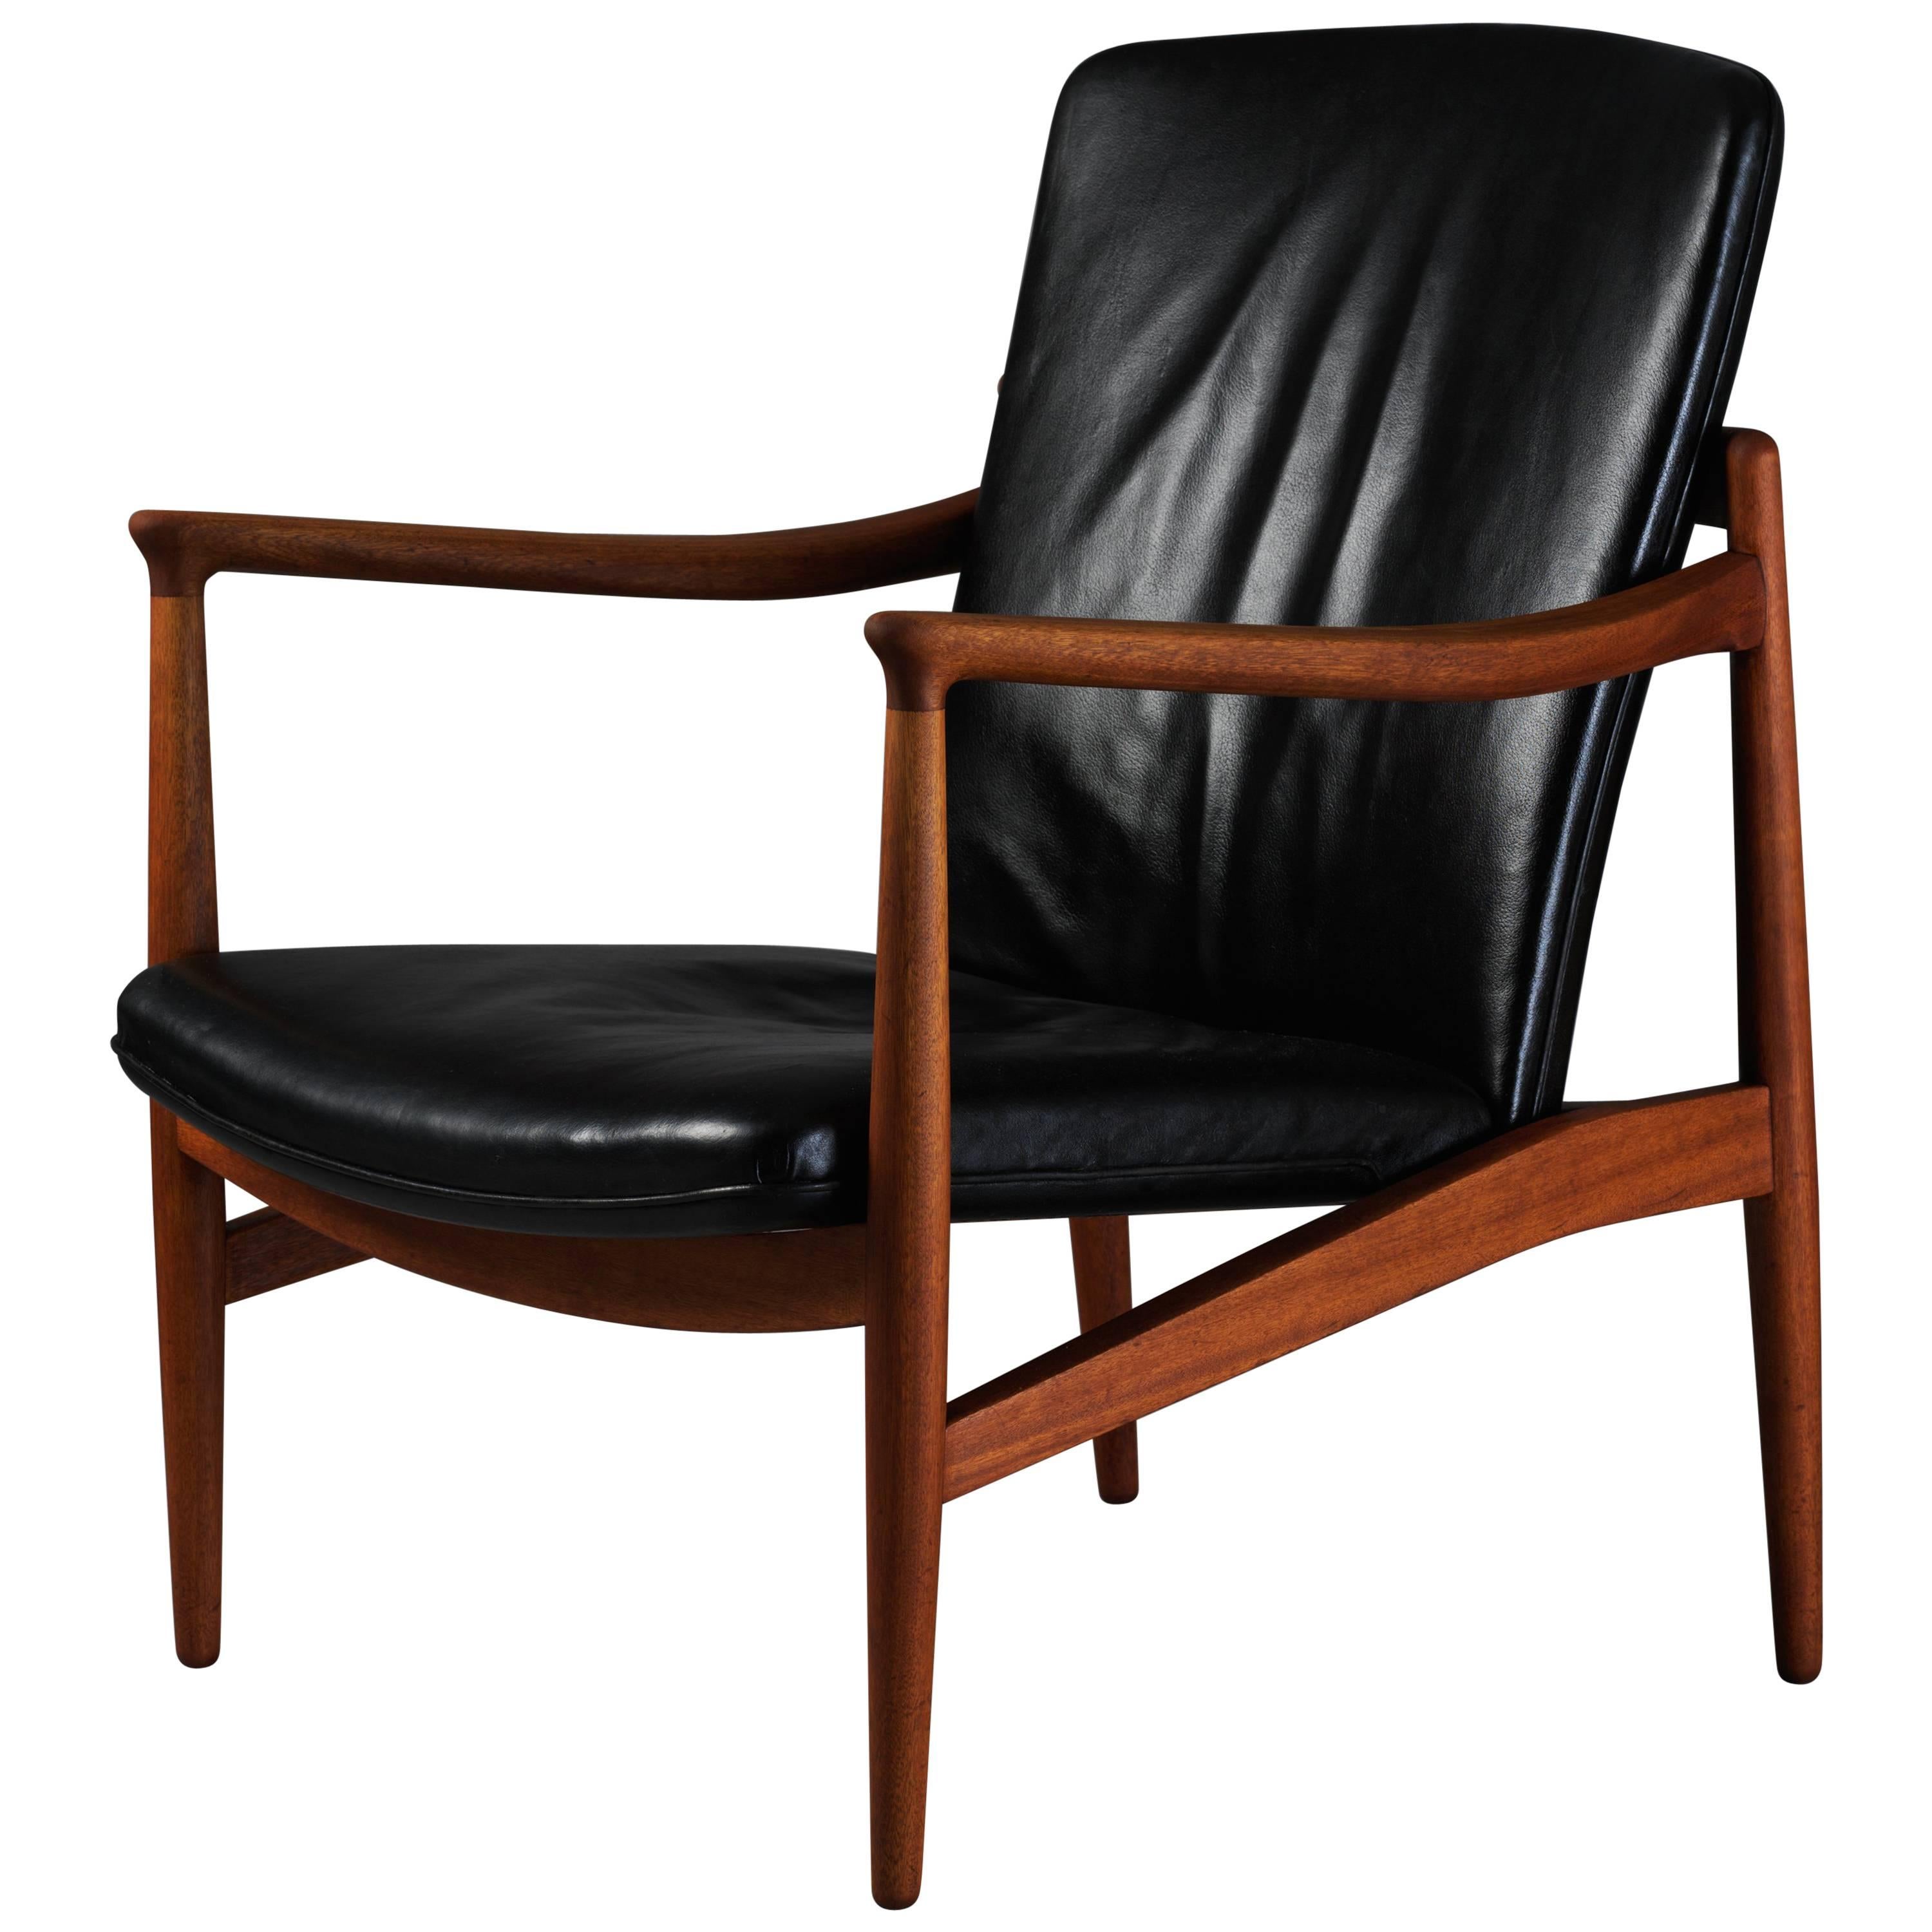 Jacob Kjaer, Adjustable Lounge Chair, Teak, Original Black Leather, Denmark 1945